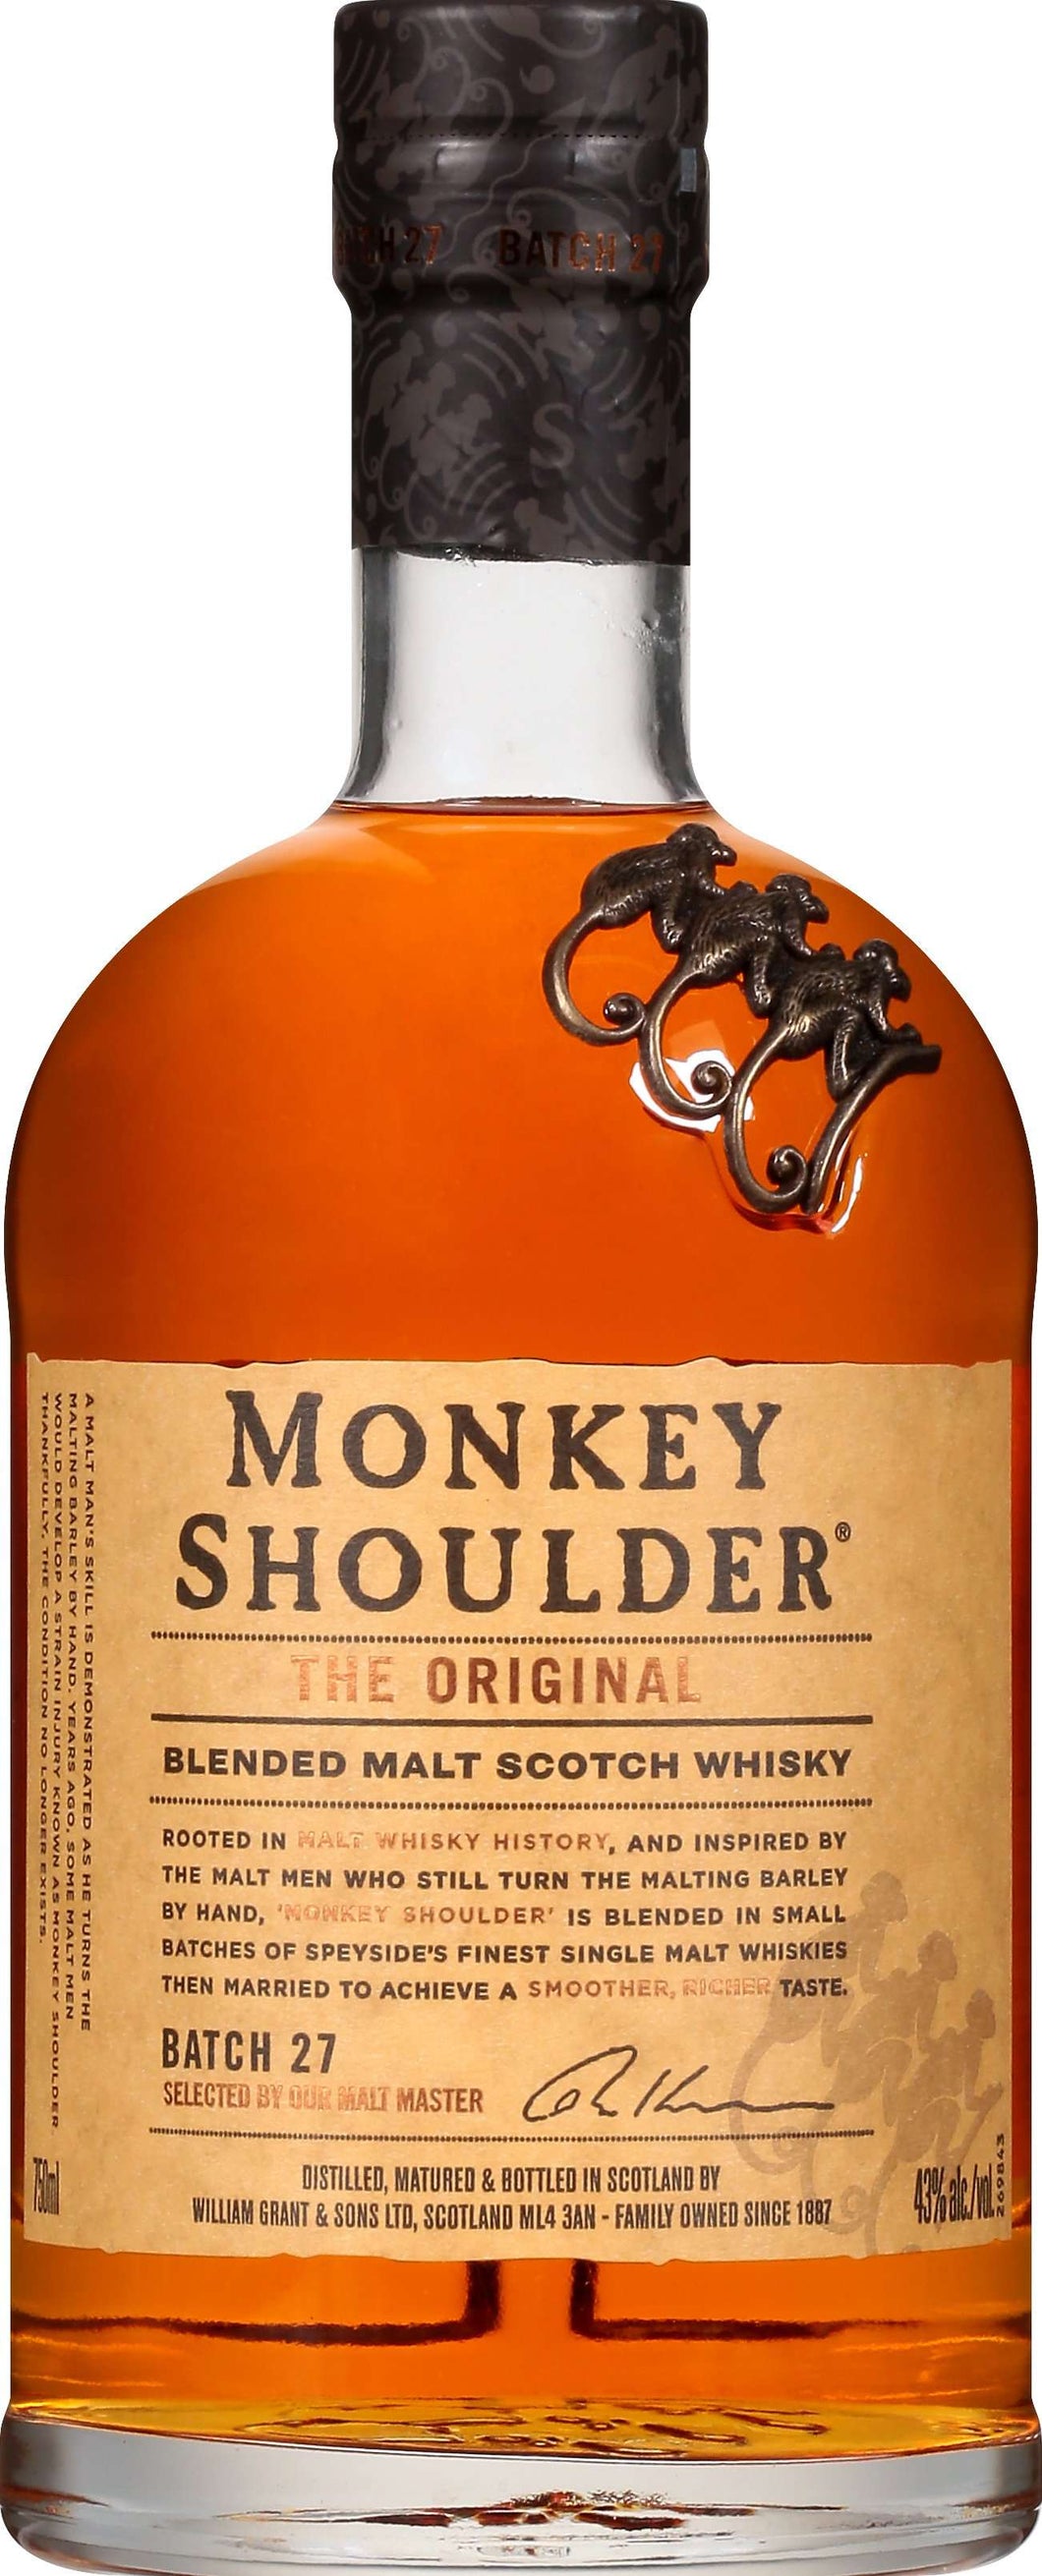 Monkey Shoulder Scotch